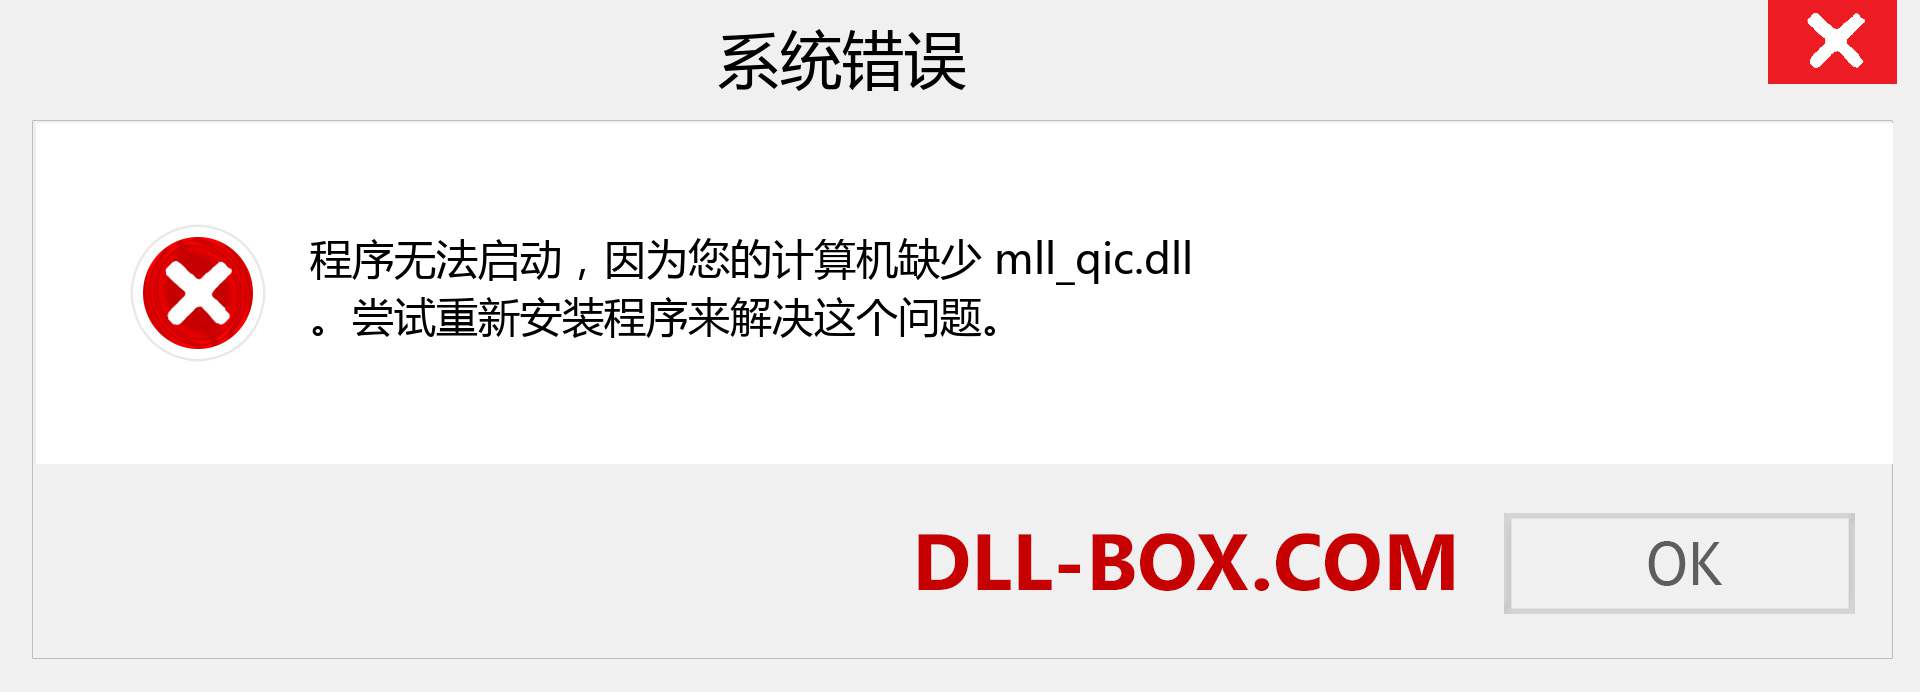 mll_qic.dll 文件丢失？。 适用于 Windows 7、8、10 的下载 - 修复 Windows、照片、图像上的 mll_qic dll 丢失错误